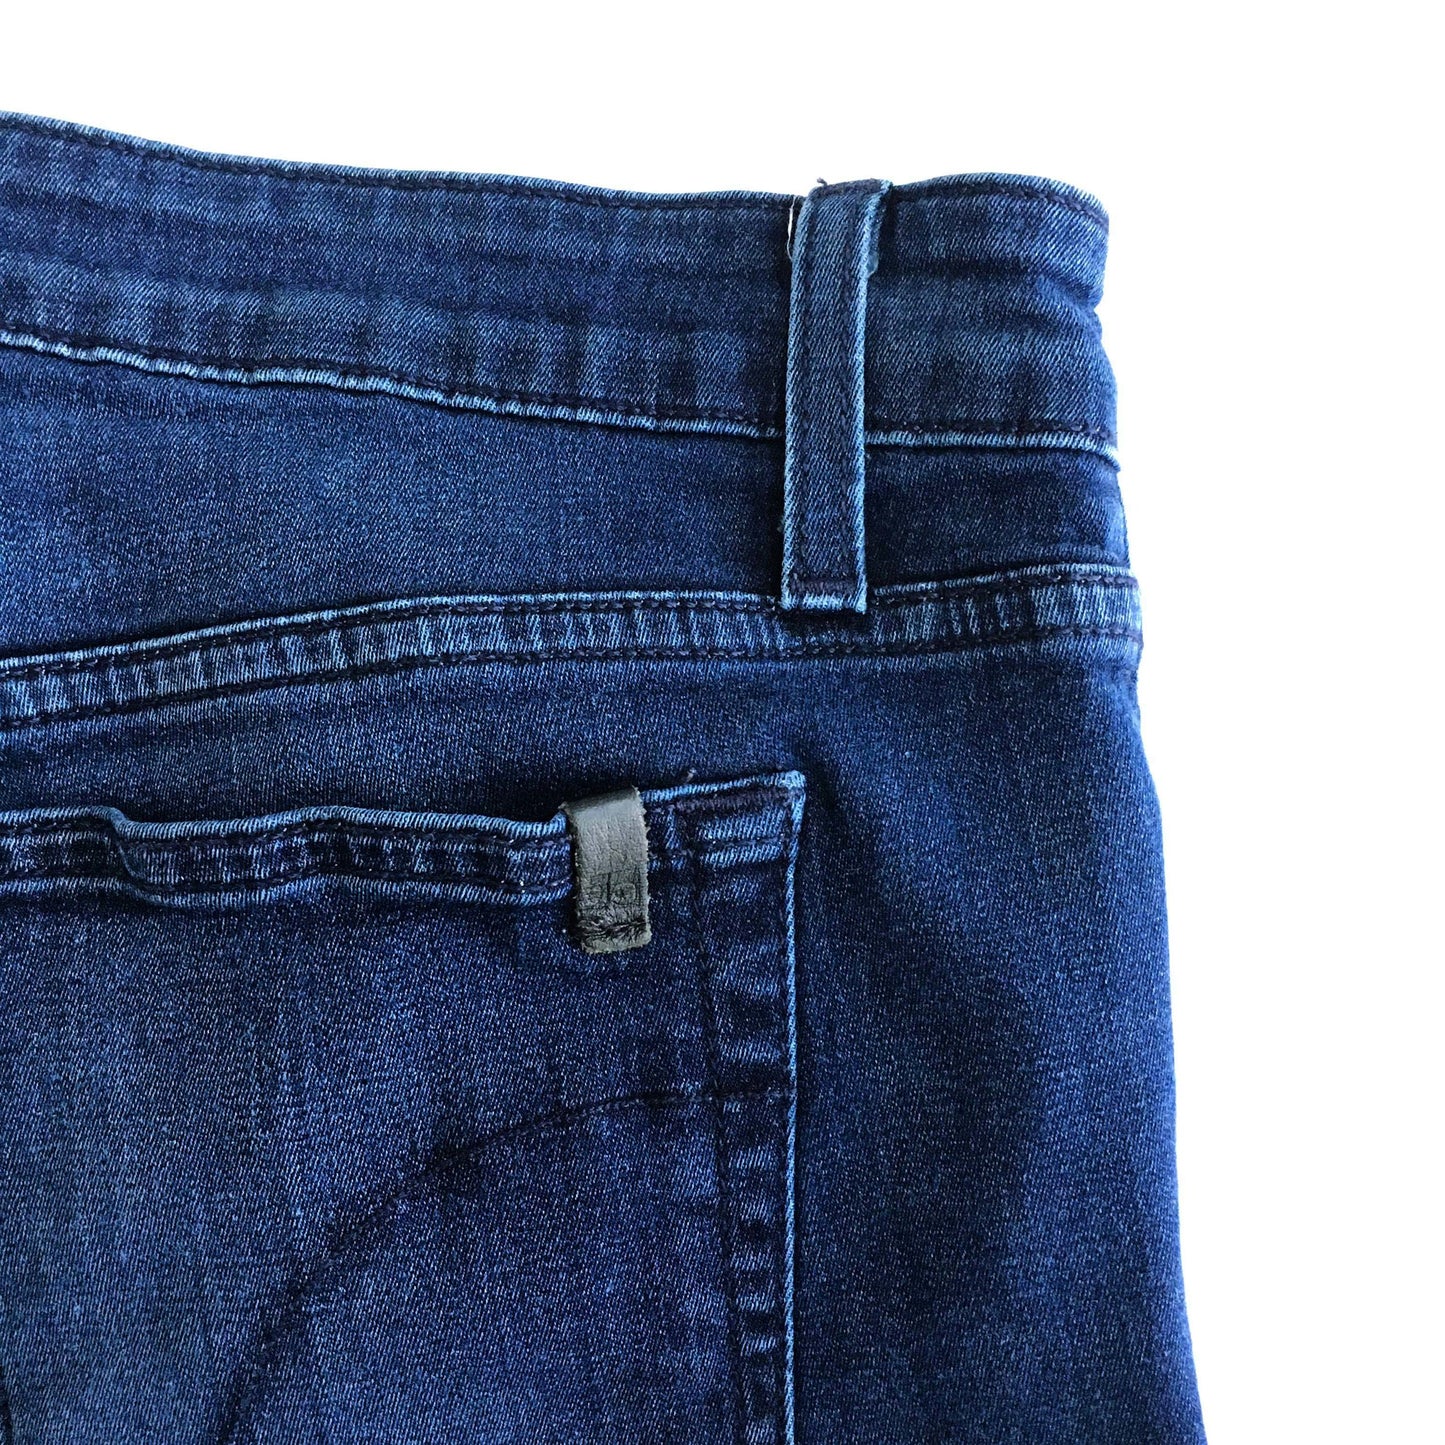 Joe's Jeans Ultra Slim fit skinny jeans - size 30